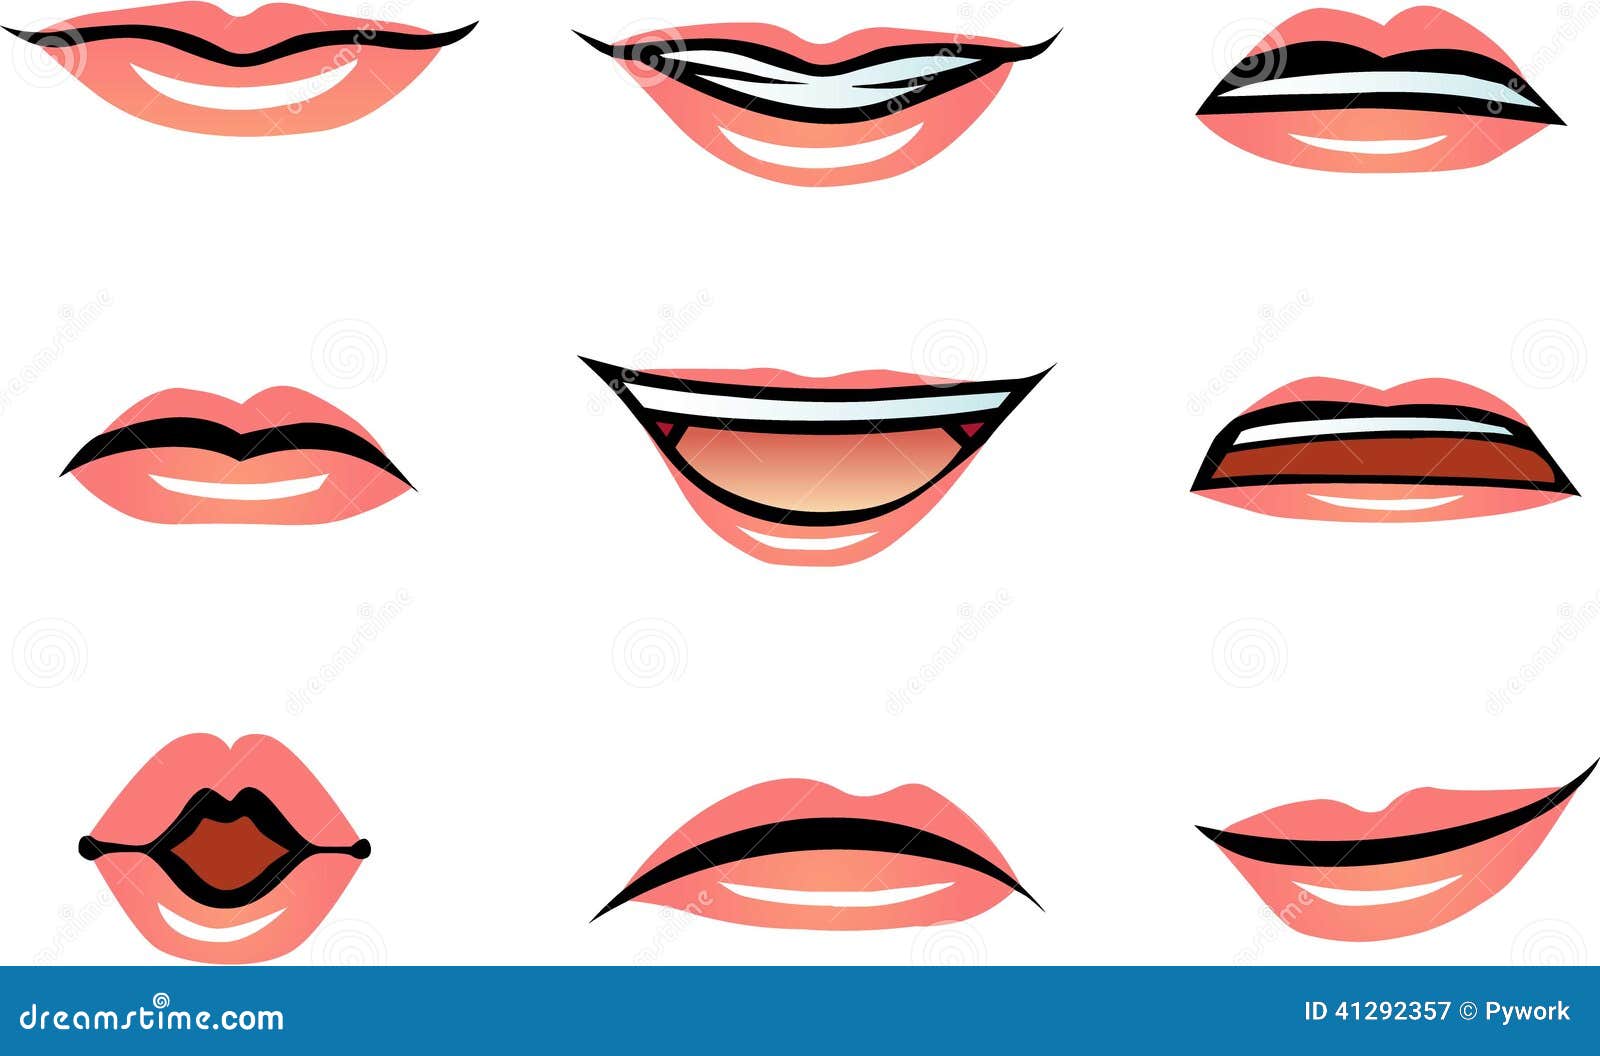 lips illustration clipart - photo #49